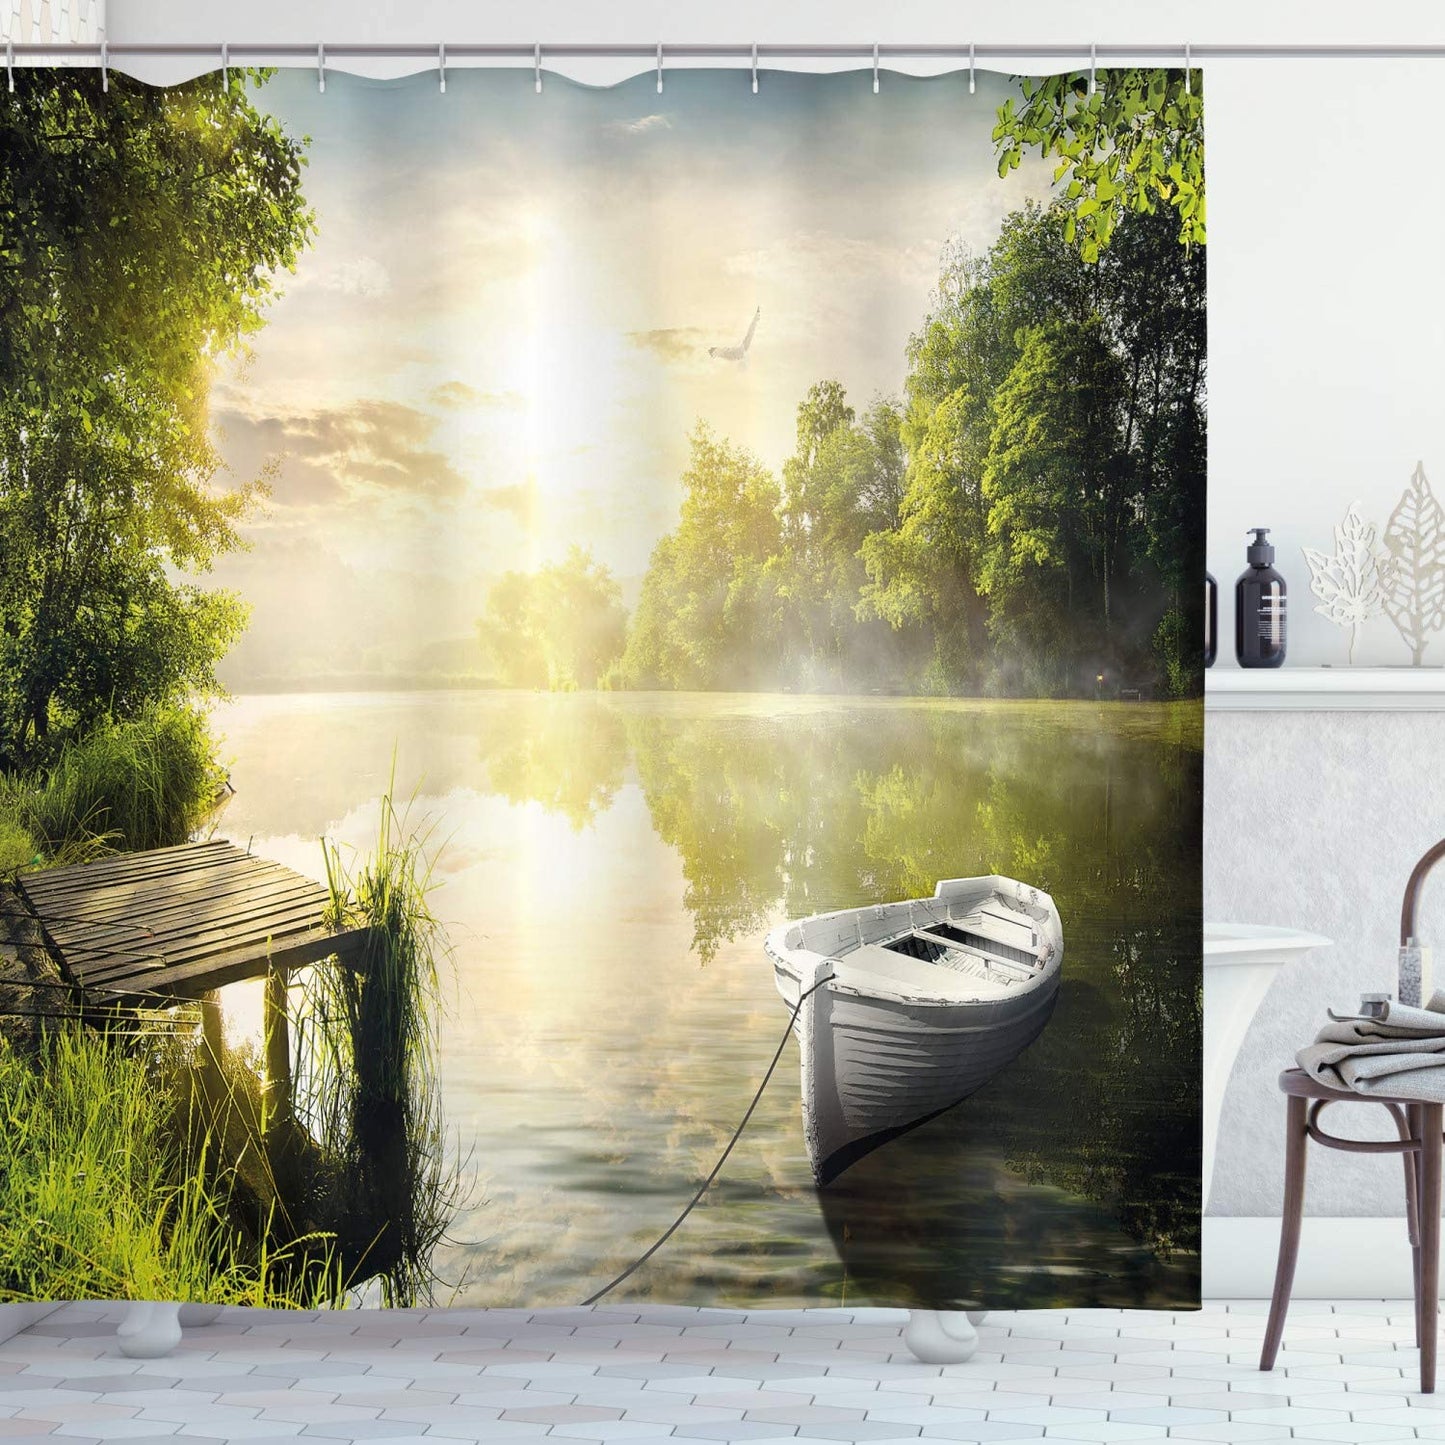 Boating Lake Garden Shower Curtain - Clover Online